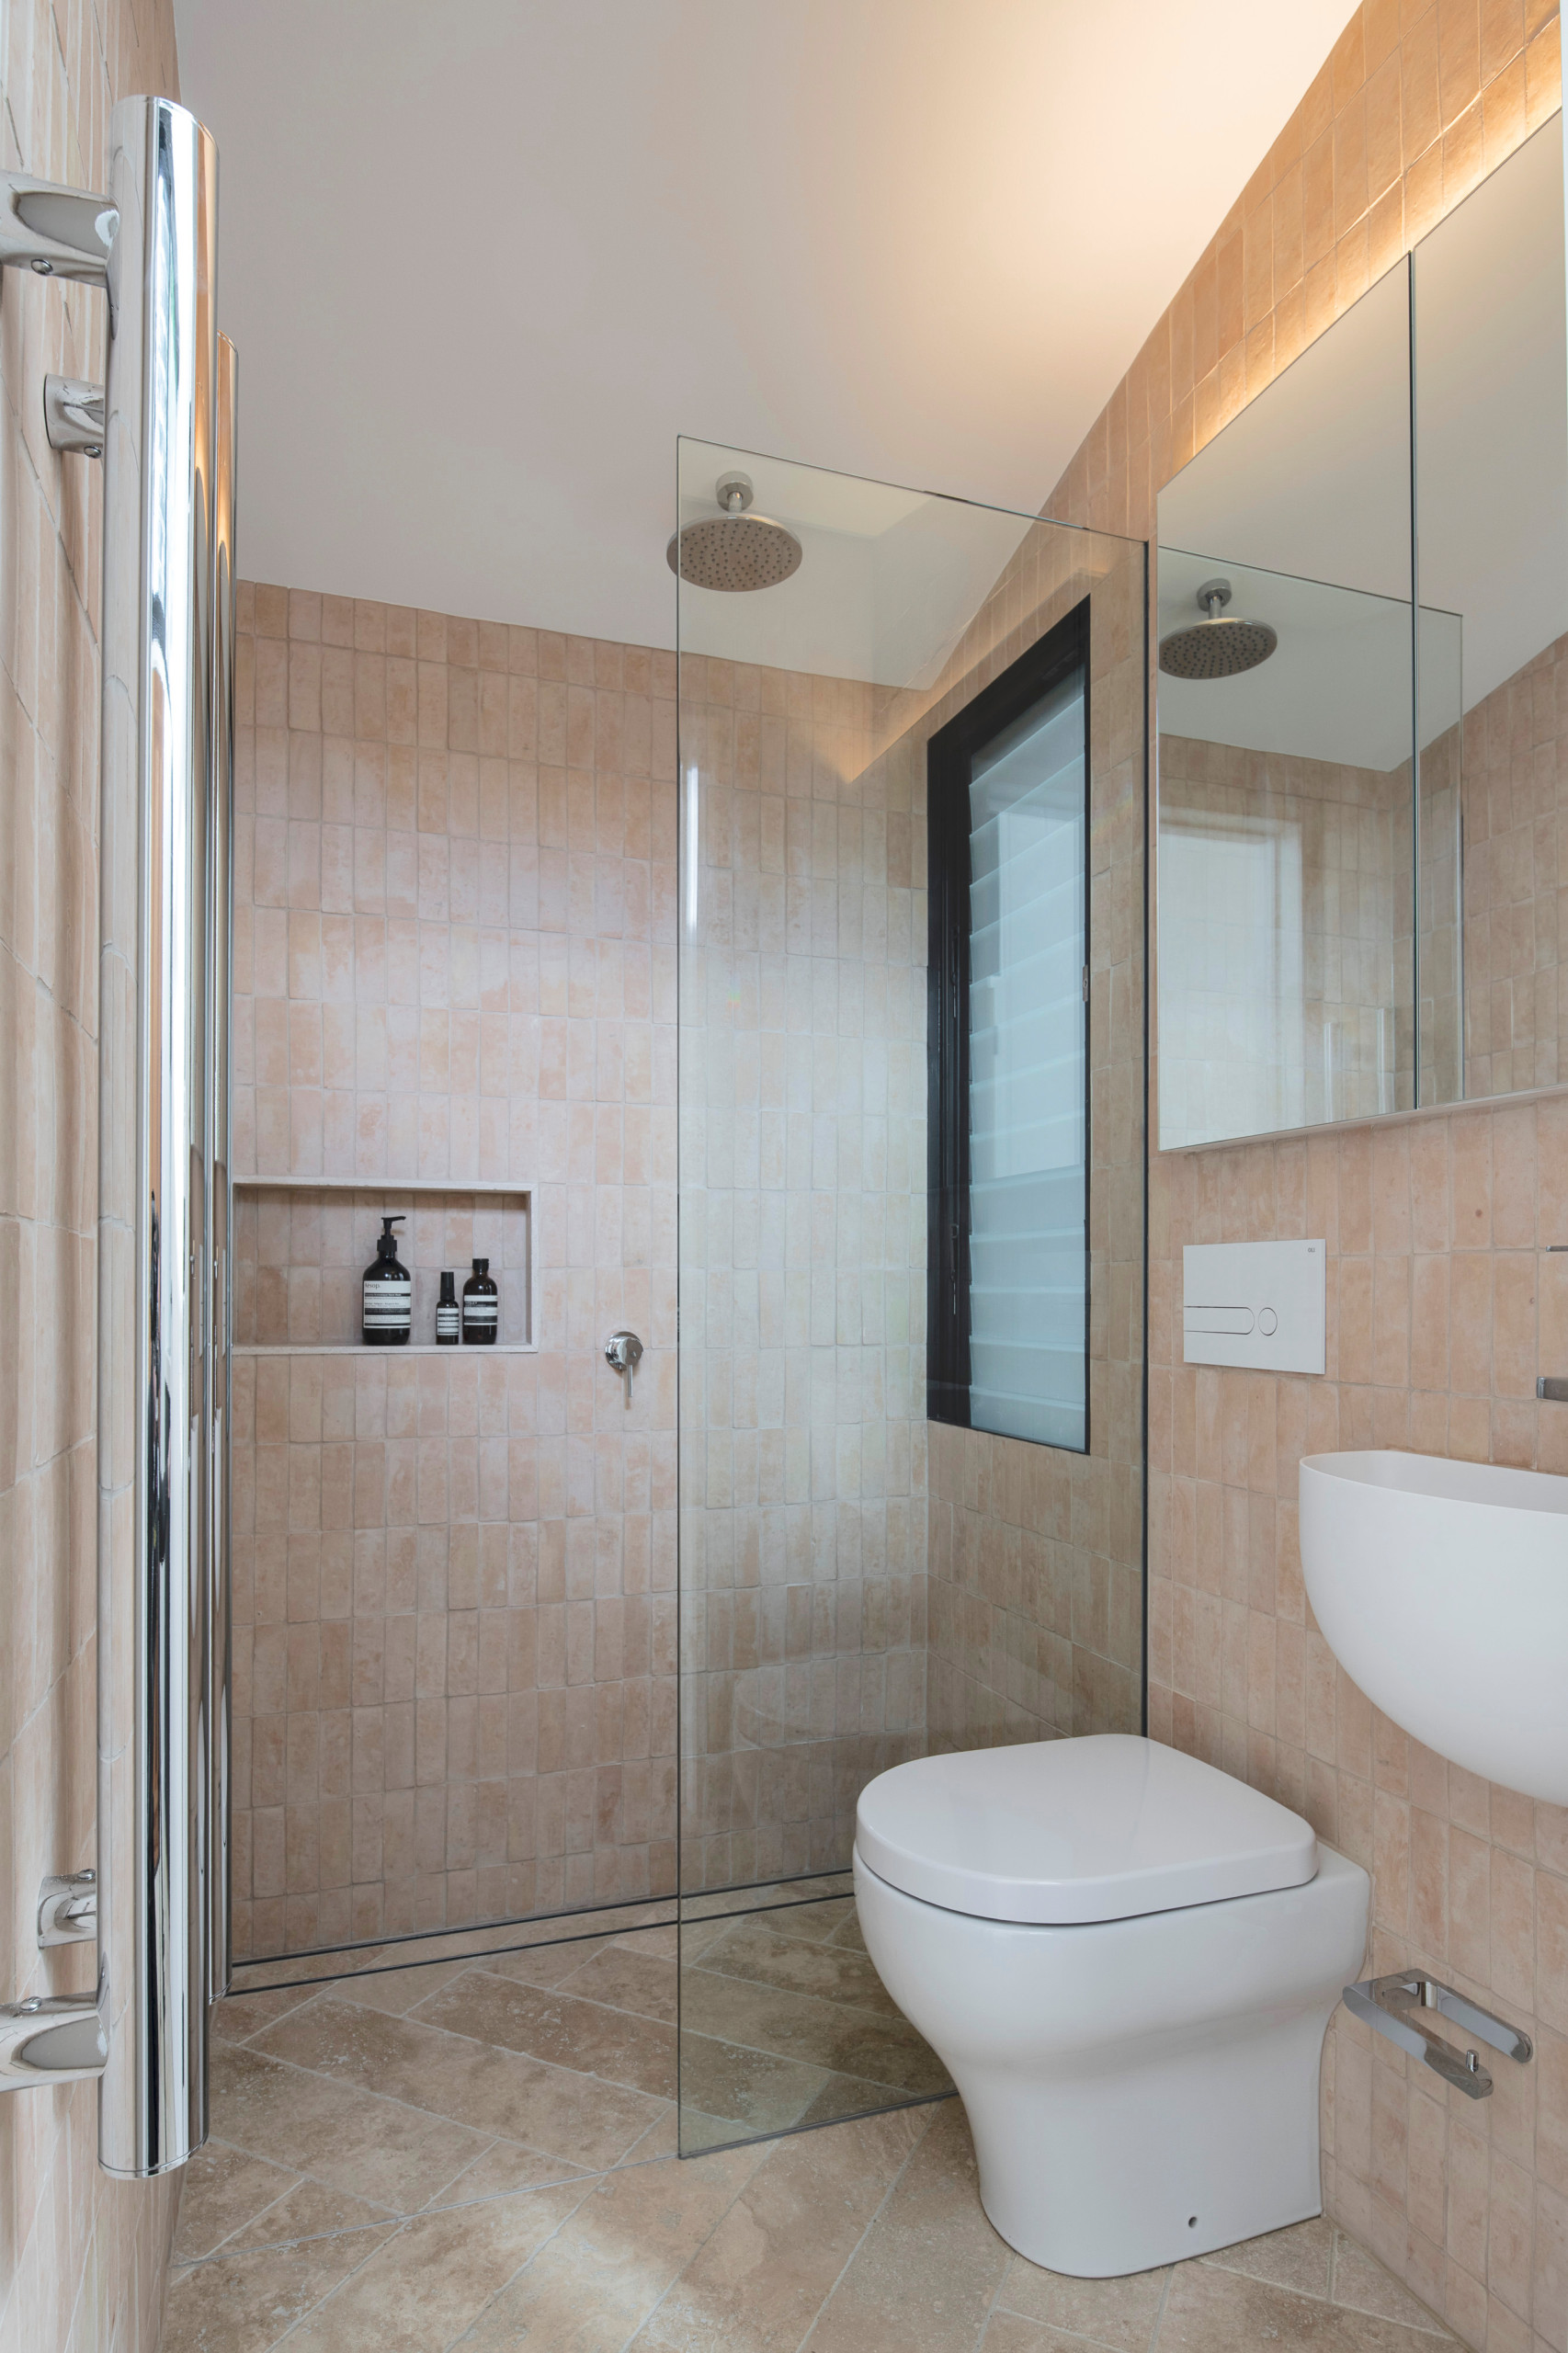 Adding Value to Your Bathroom Design